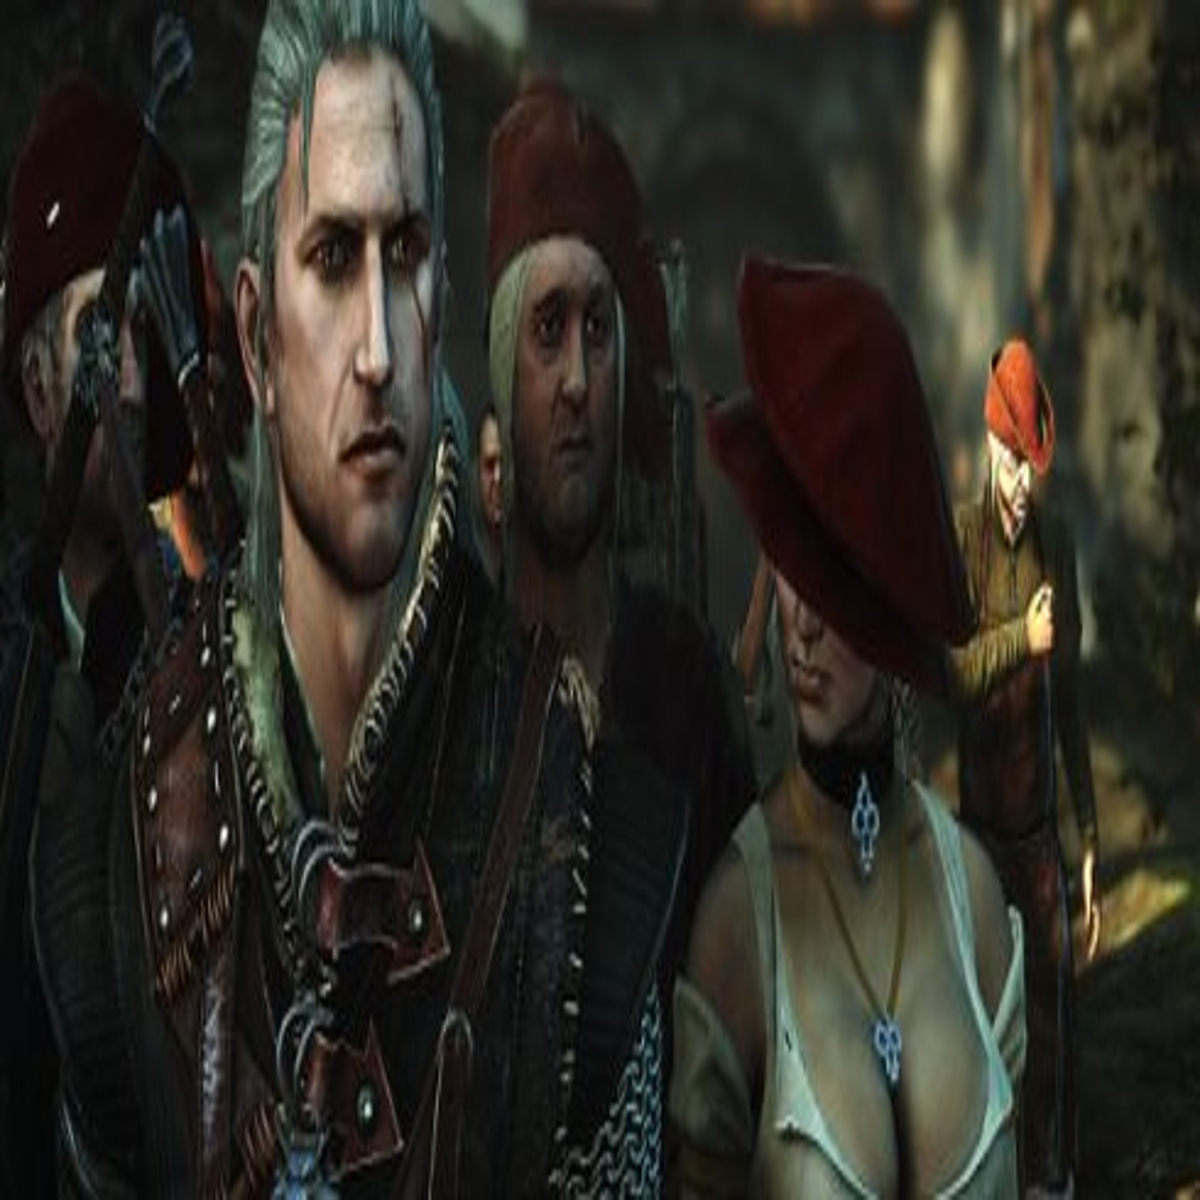 Witcher 2 Xbox 360 Preview - E3 2011